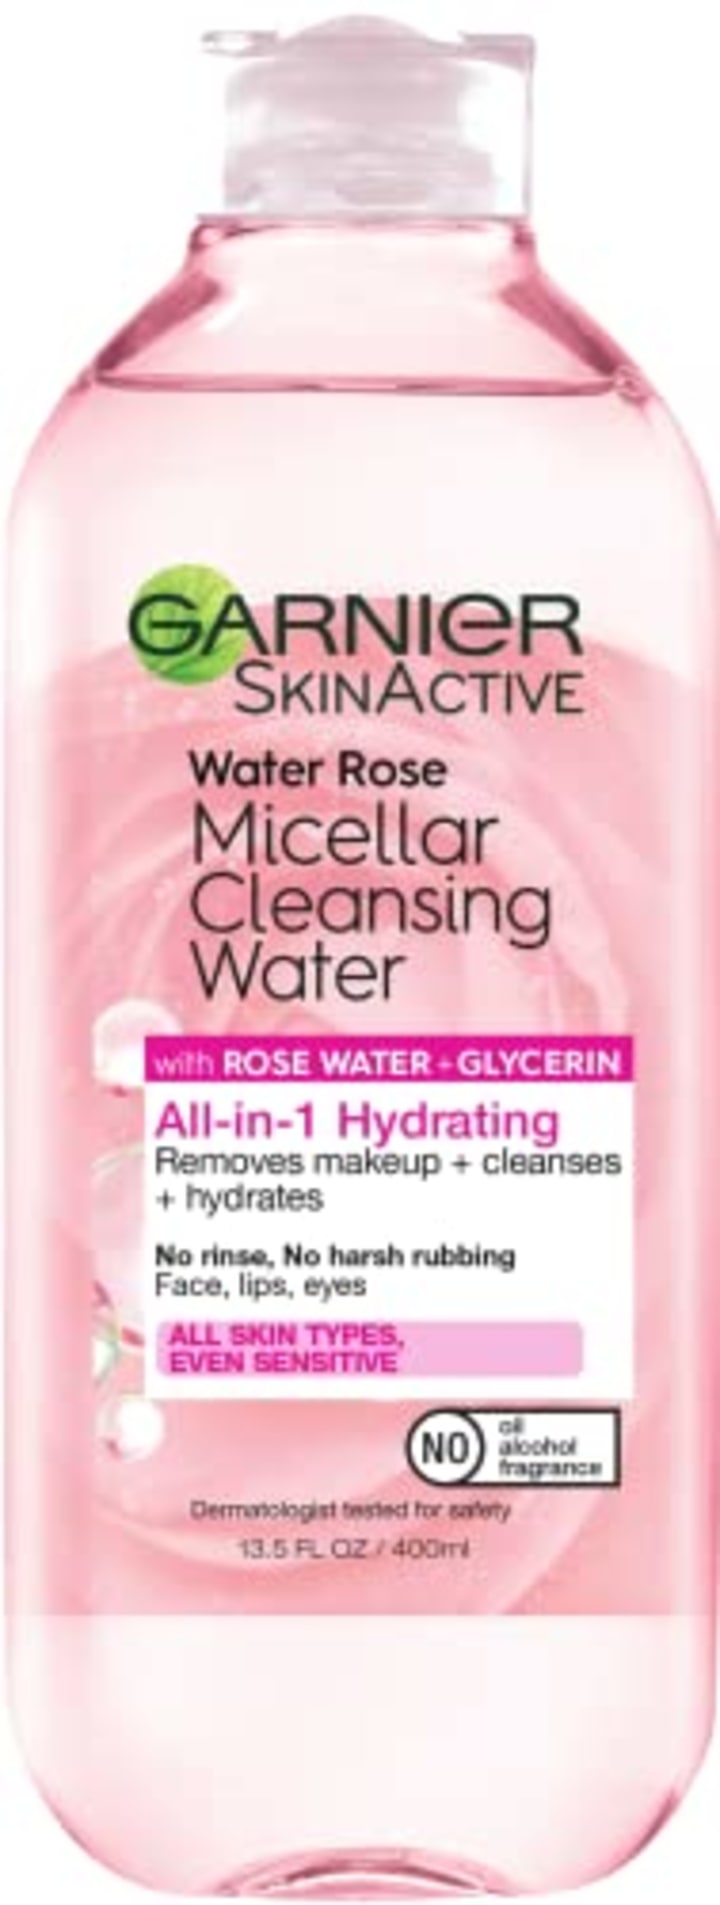 SkinActive Water Rose Micellar Cleansing Water